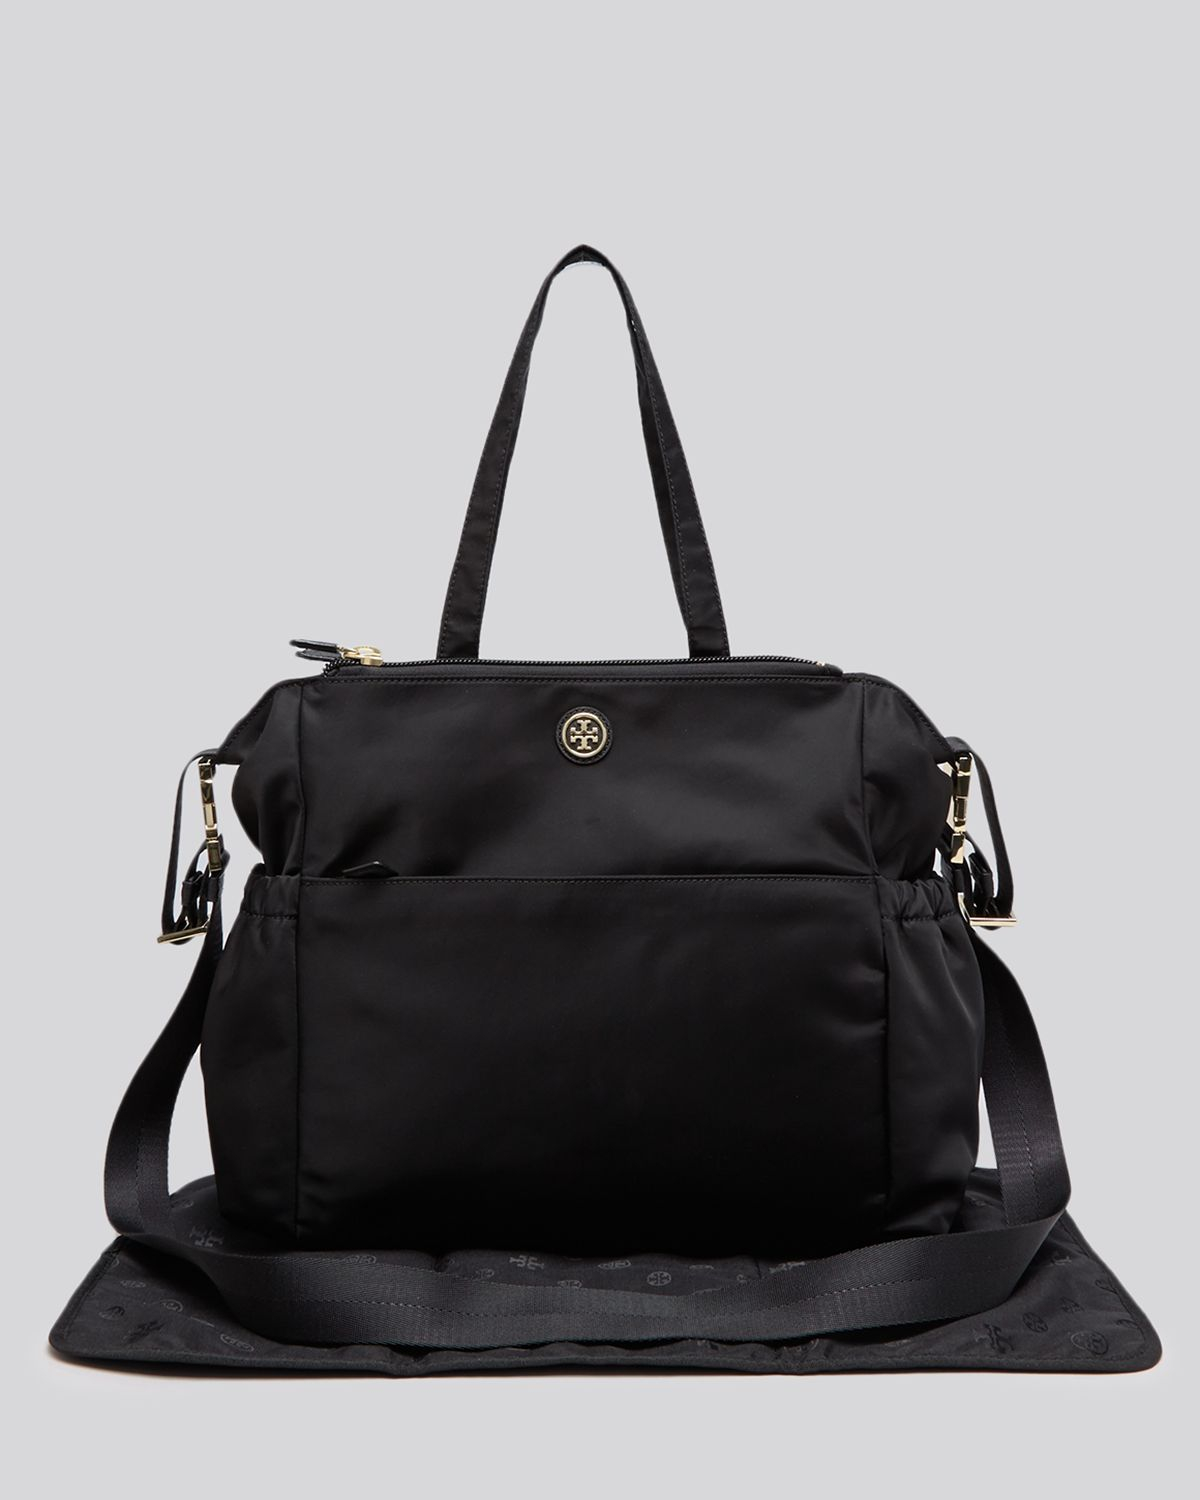 Lyst - Tory Burch Diaper Bag - Travel Nylon in Black